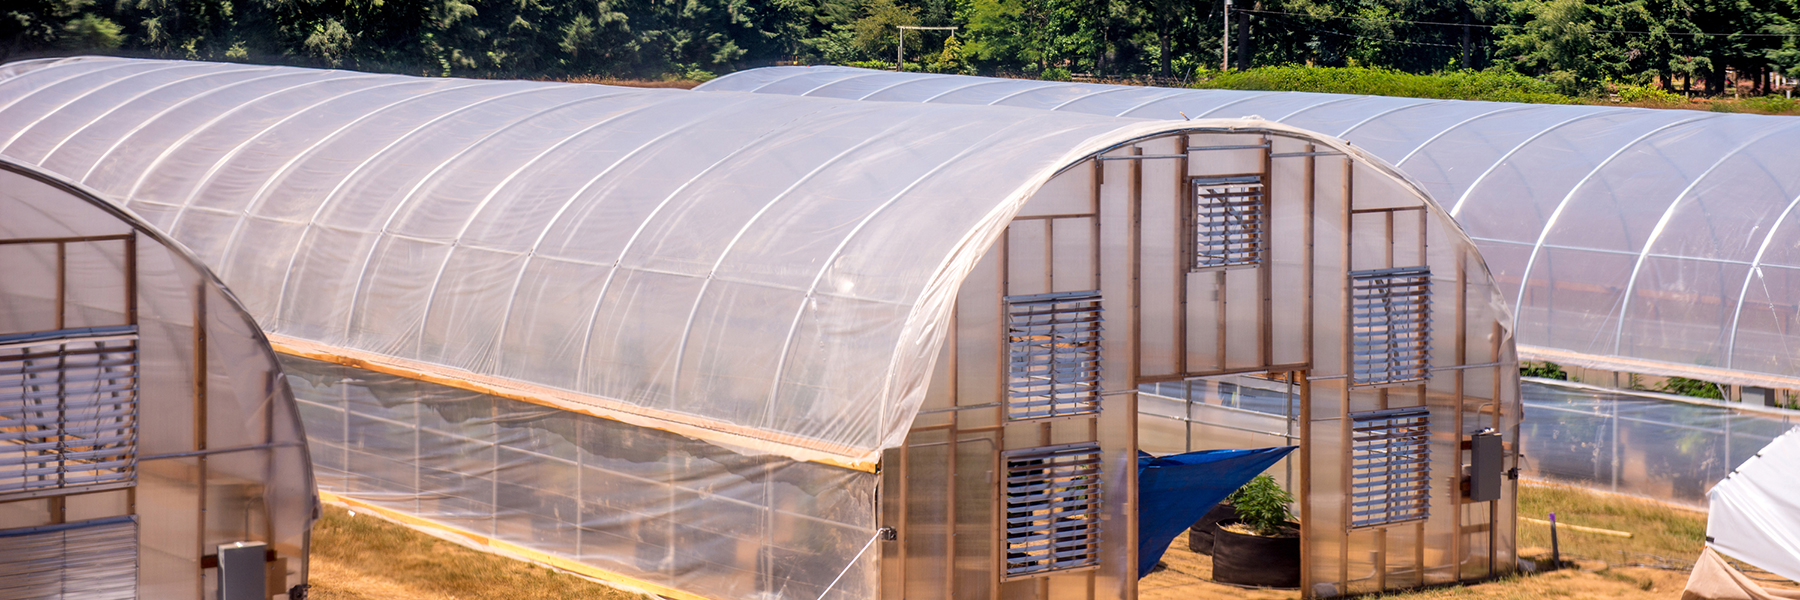 cannaibis greenhouses